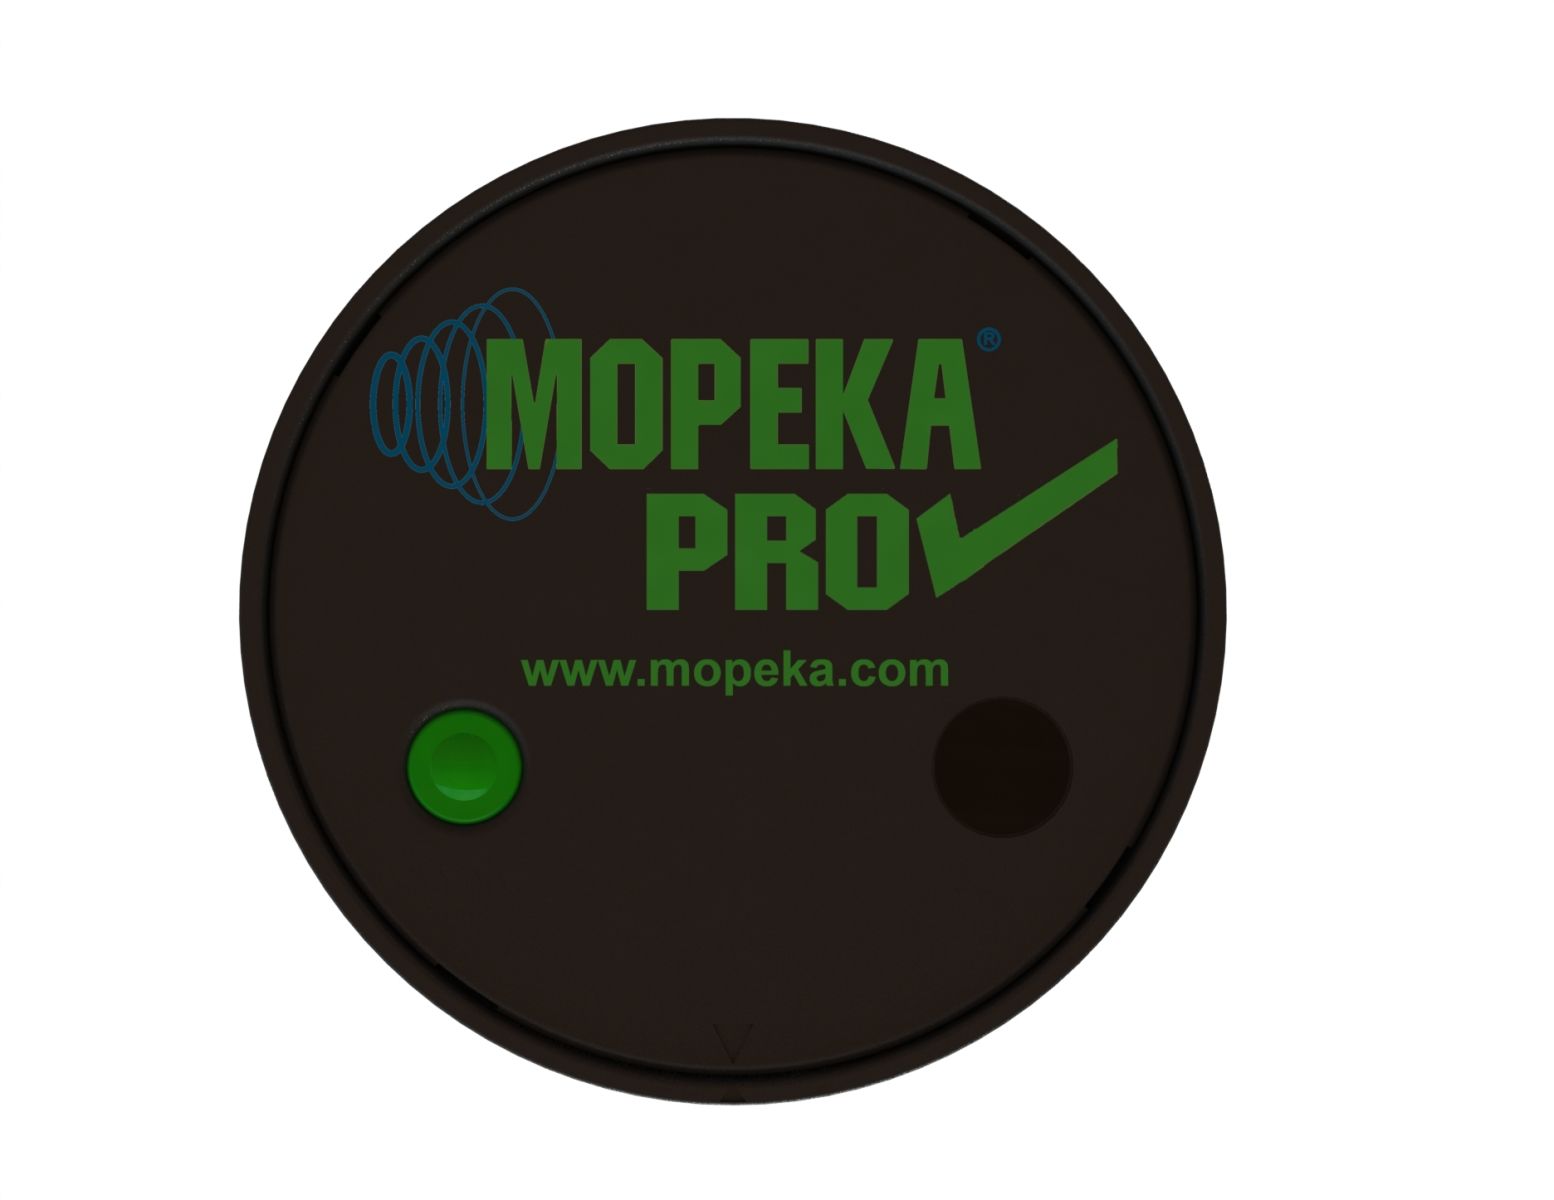 Mopeka Universal Sensor Front View showing sync button